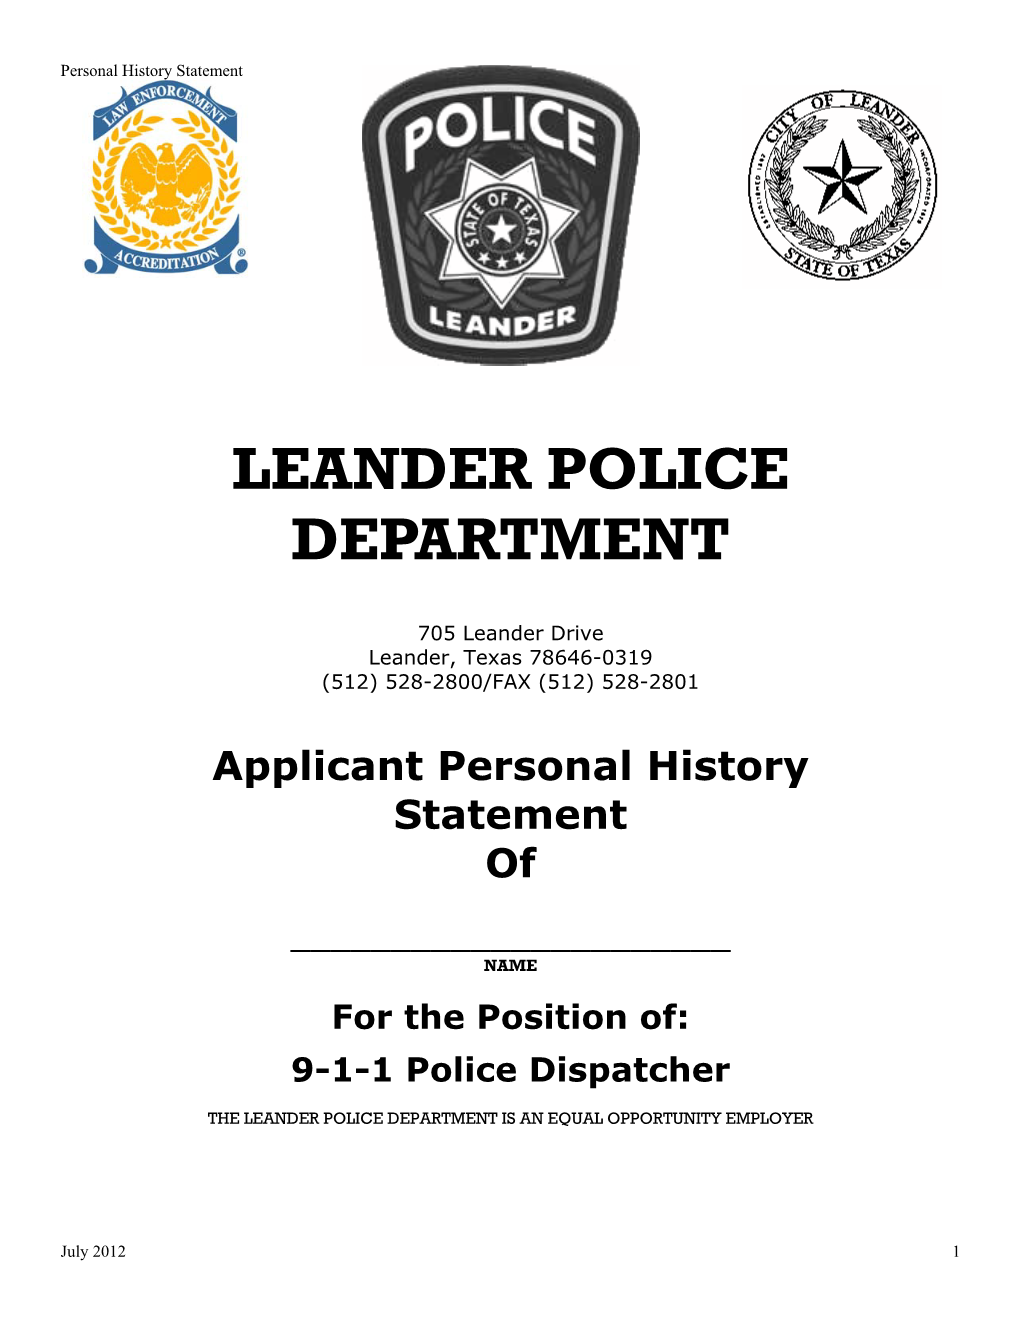 Leander Police Department